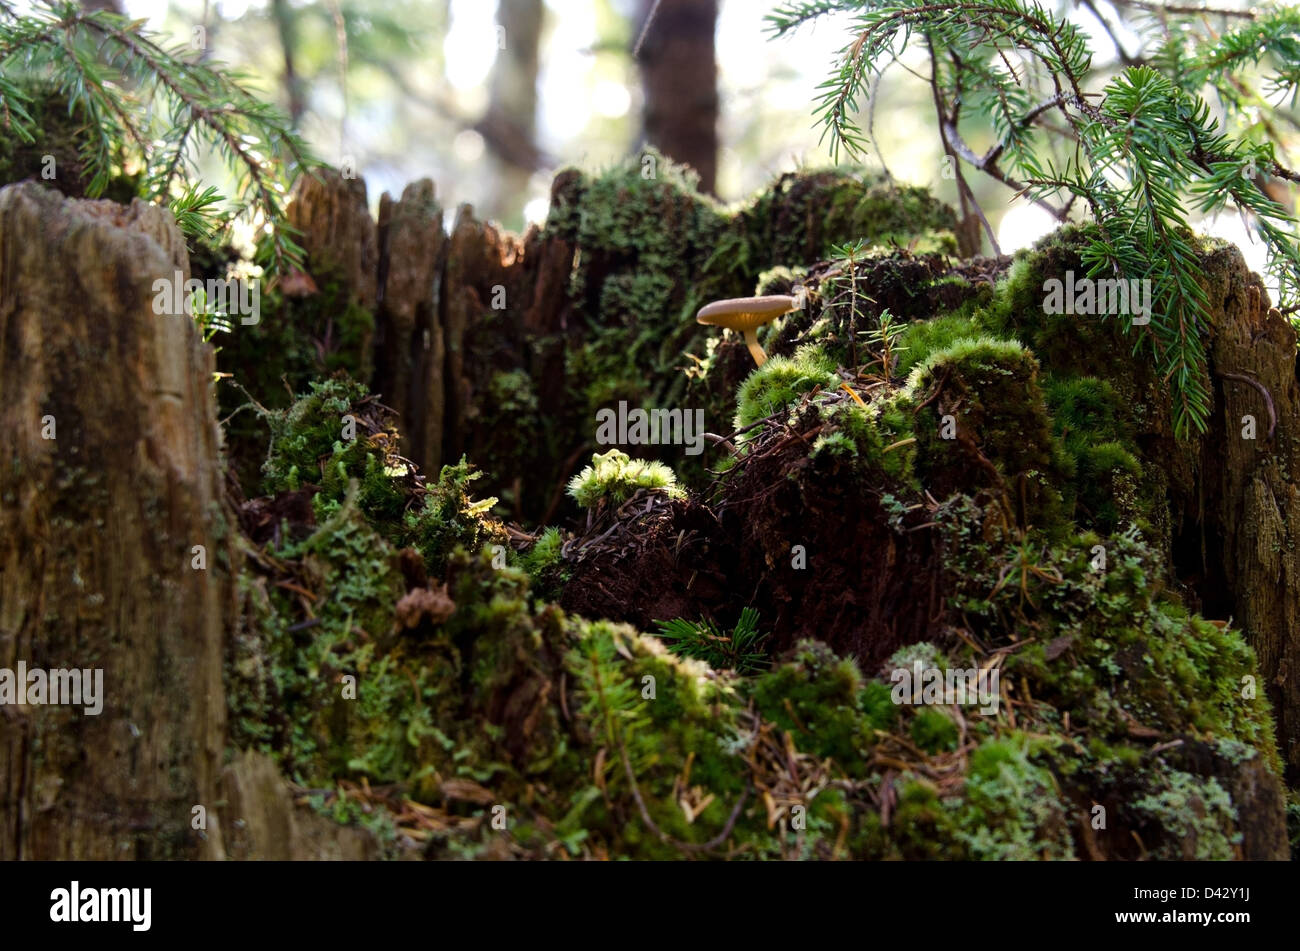 Sun-dappled moss and mushrooms in a tree stump Stock Photo